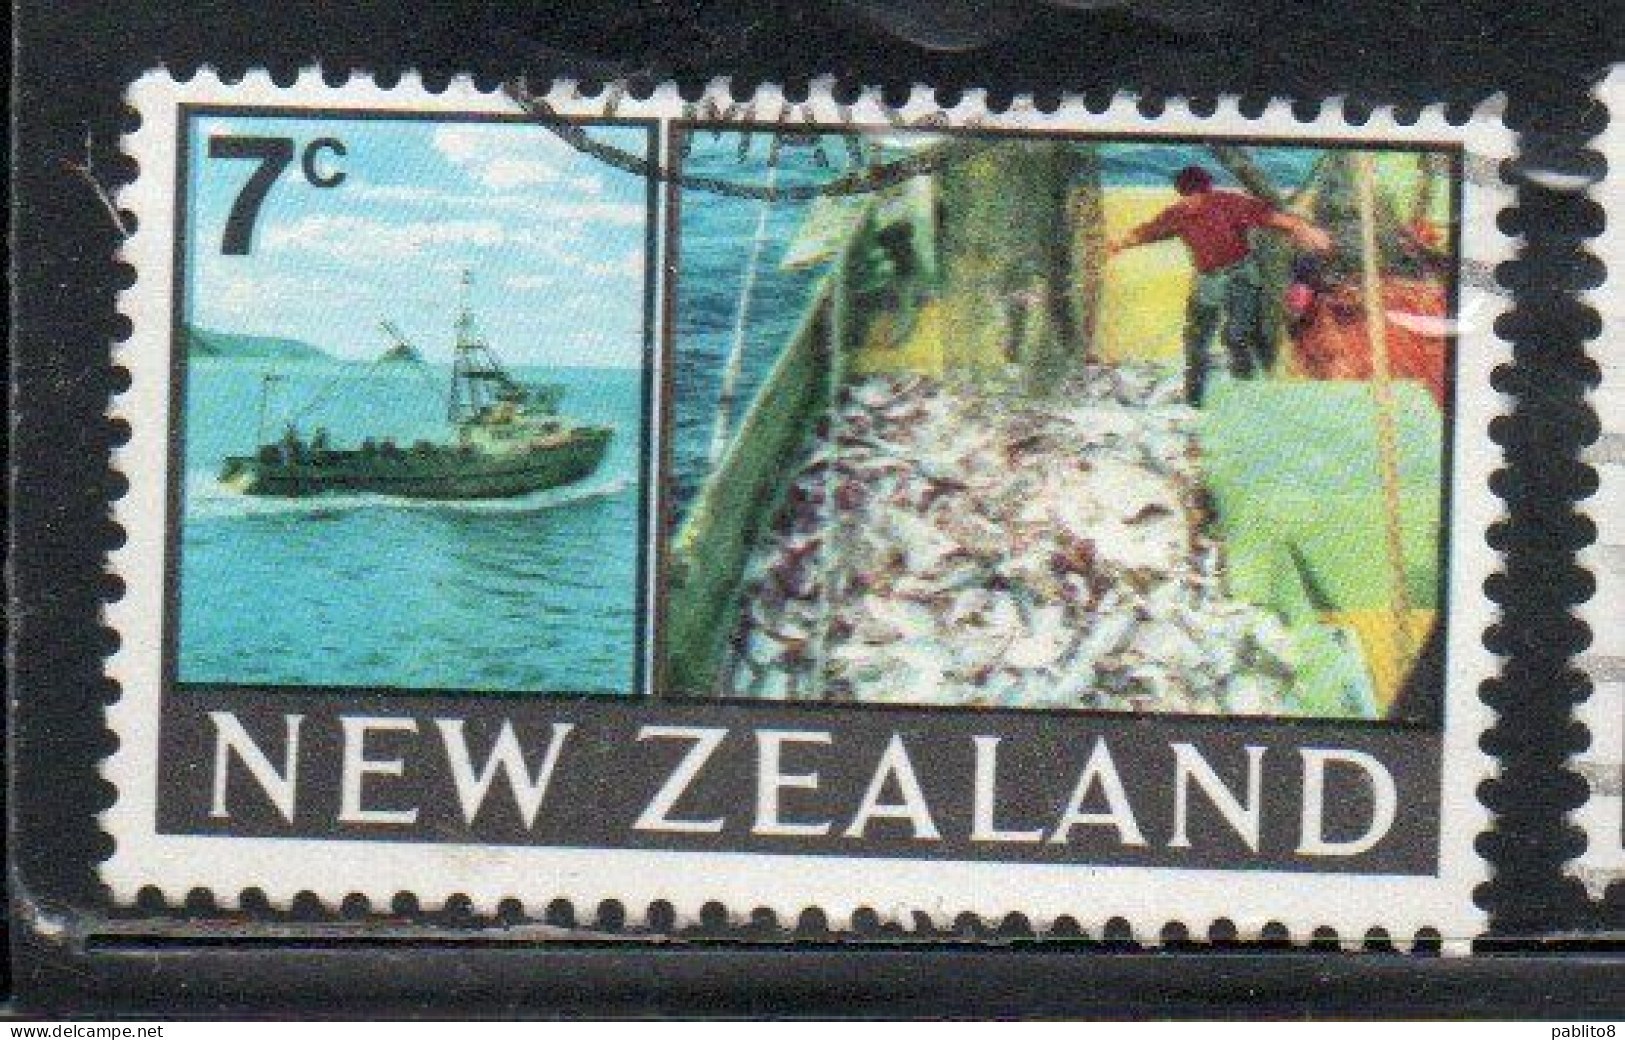 NEW ZEALAND NUOVA ZELANDA 1968 1969 TRAWLER AND CATCH 7c USED USATO OBLITERE' - Gebruikt